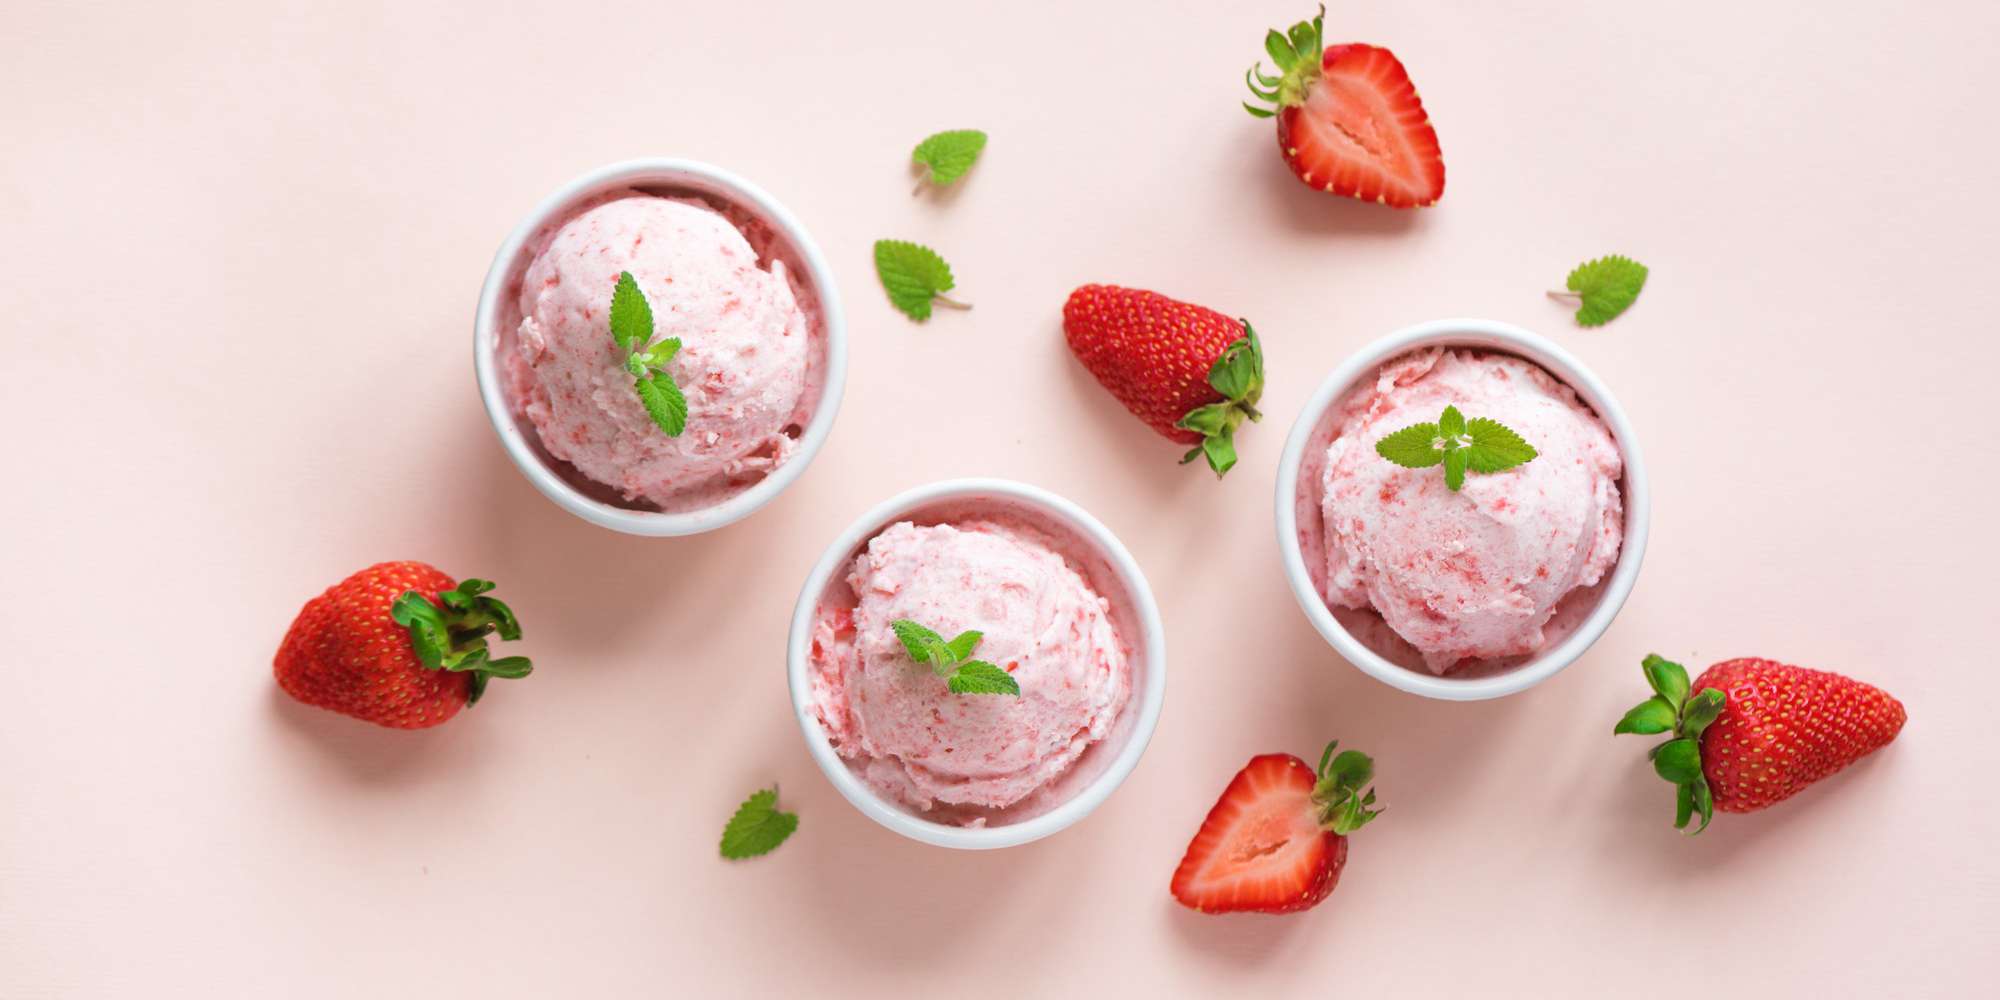 3 Ingredient Vegan Sugar Free Strawberry Ice Cream